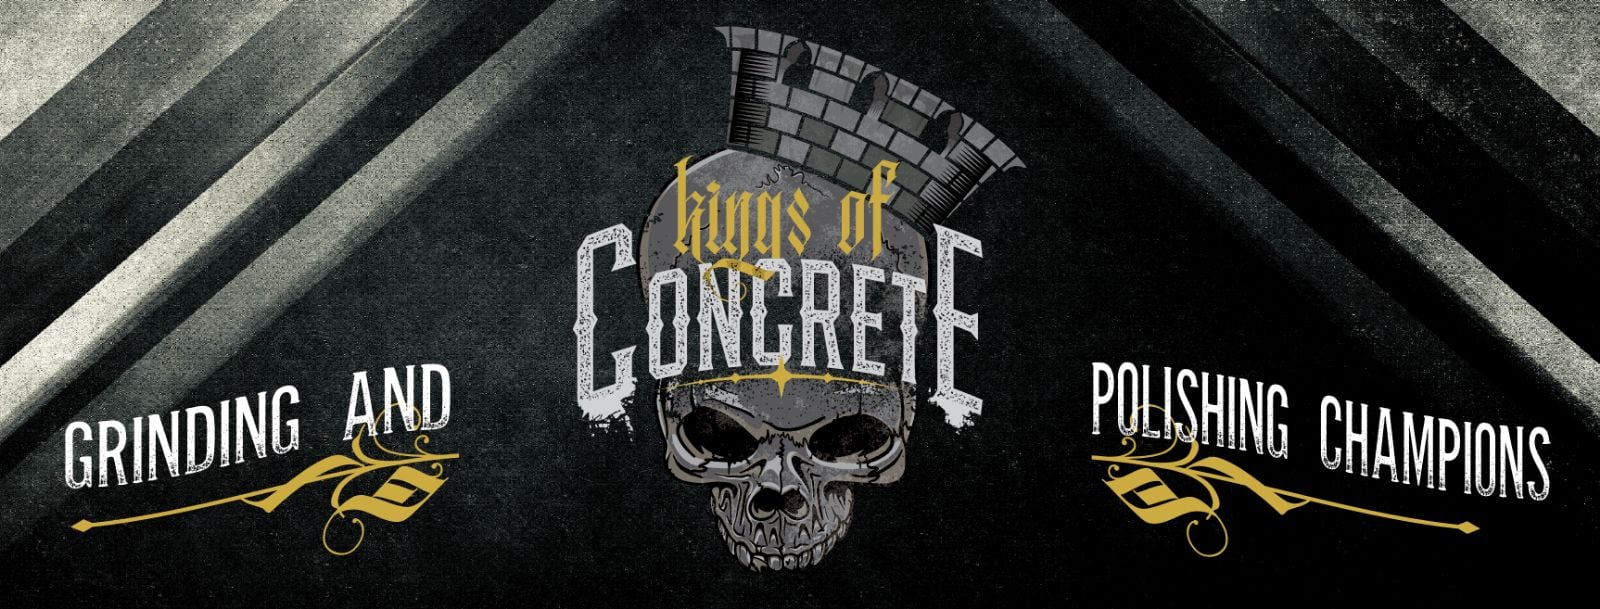 Kings Of Concrete Floor Prep and Polishing Tools's account image